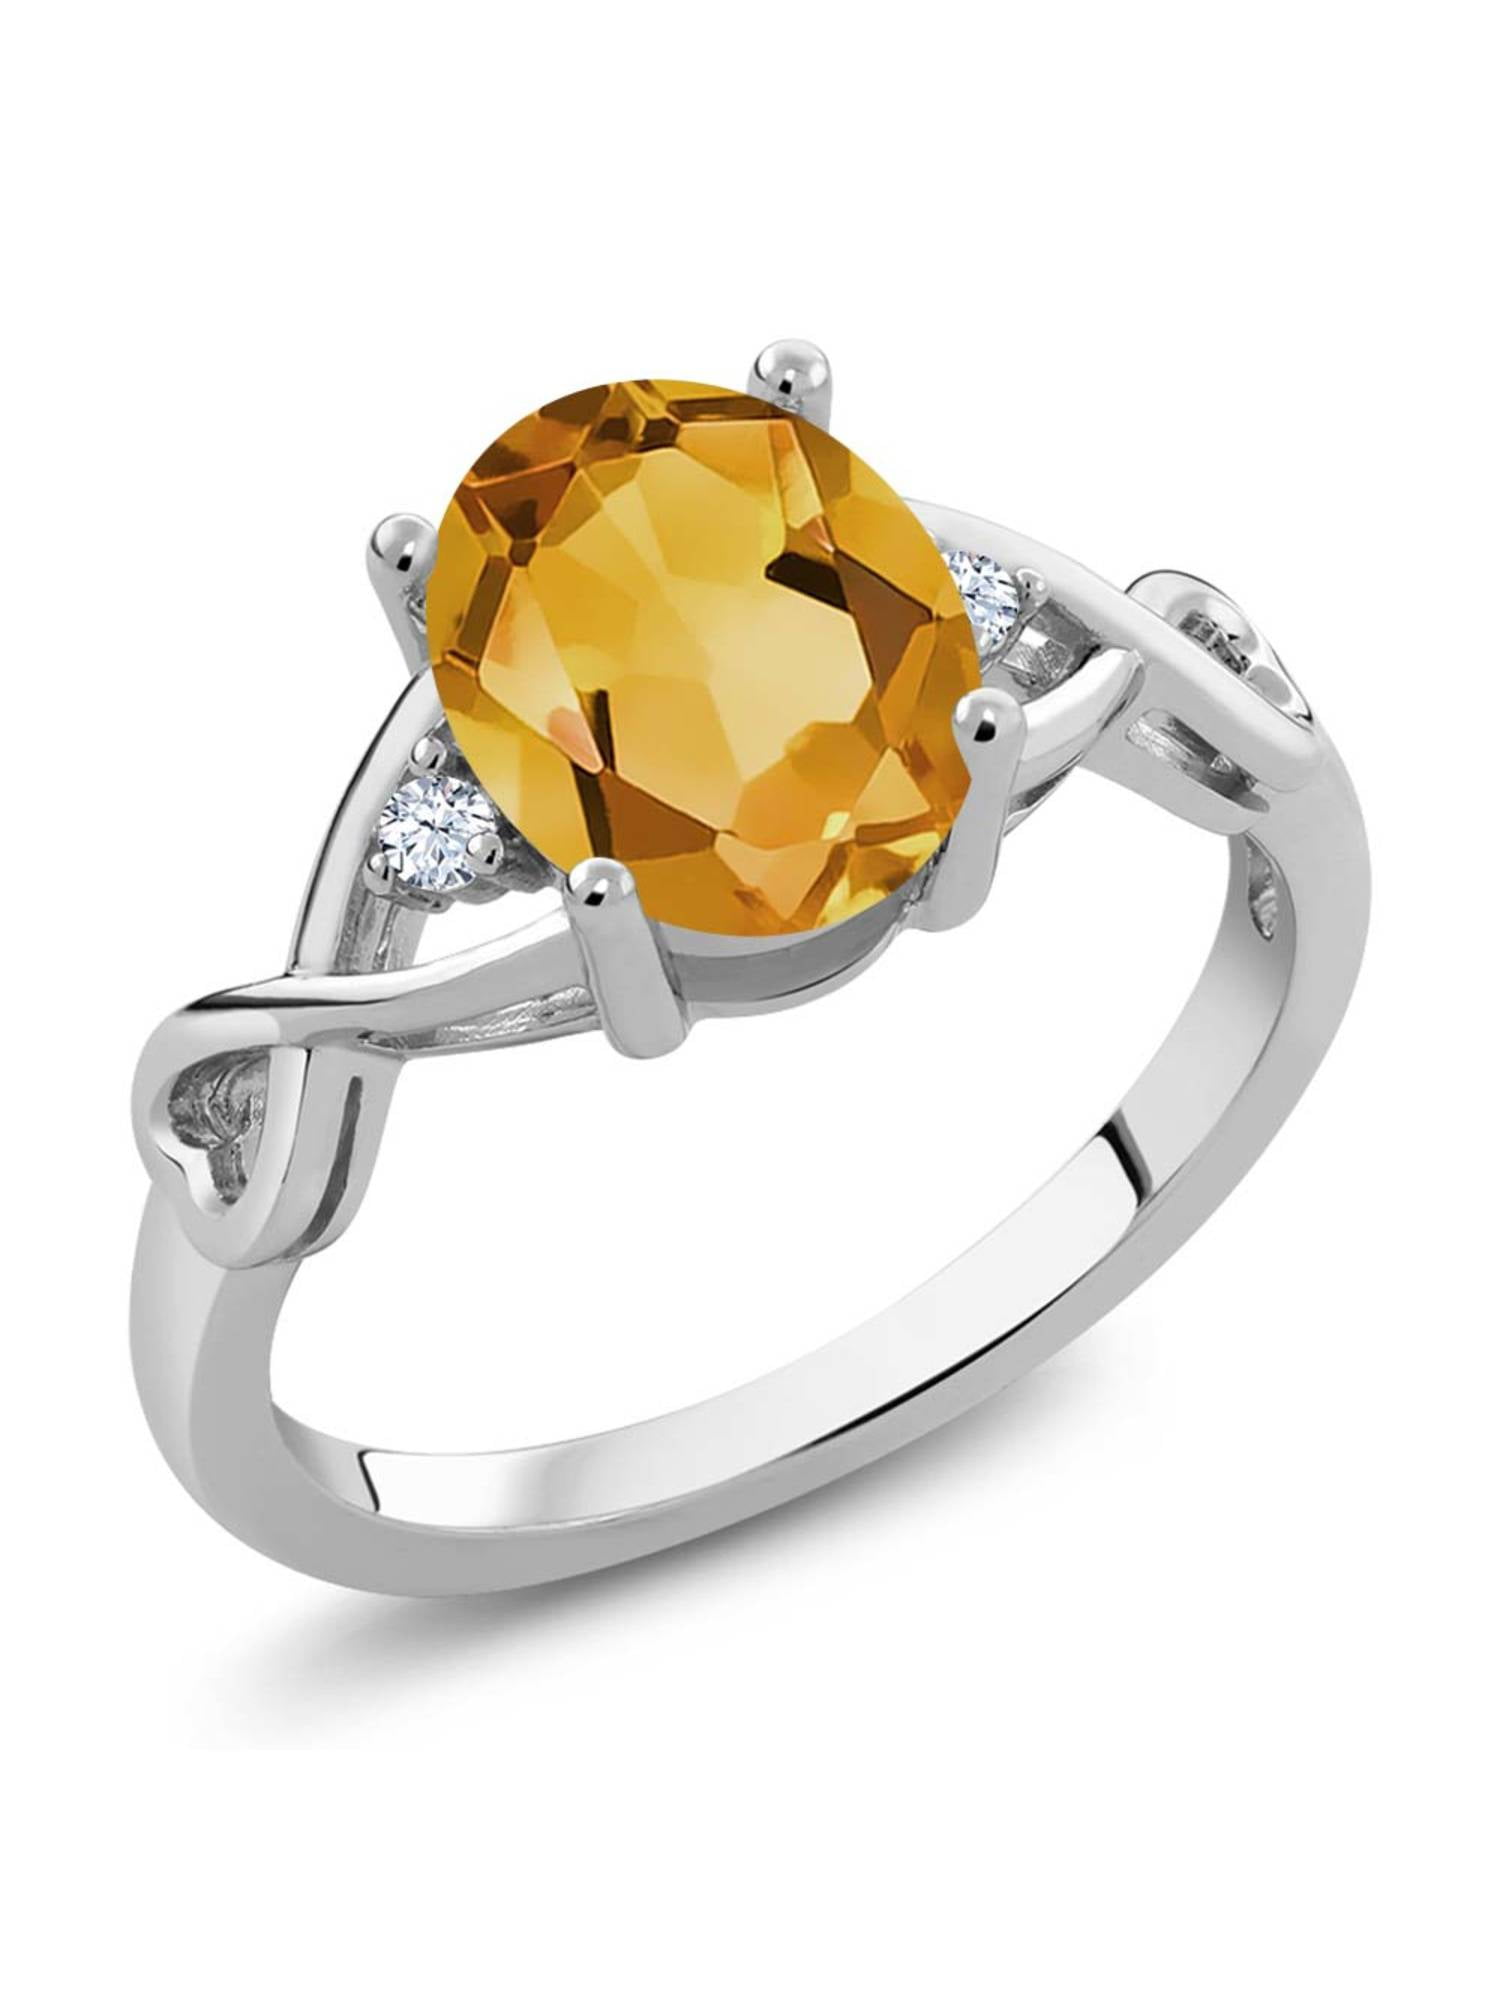 925 Sterling Silver Ring Natural Yellow Citrine Split-Shank Gemstone Size 4-11 